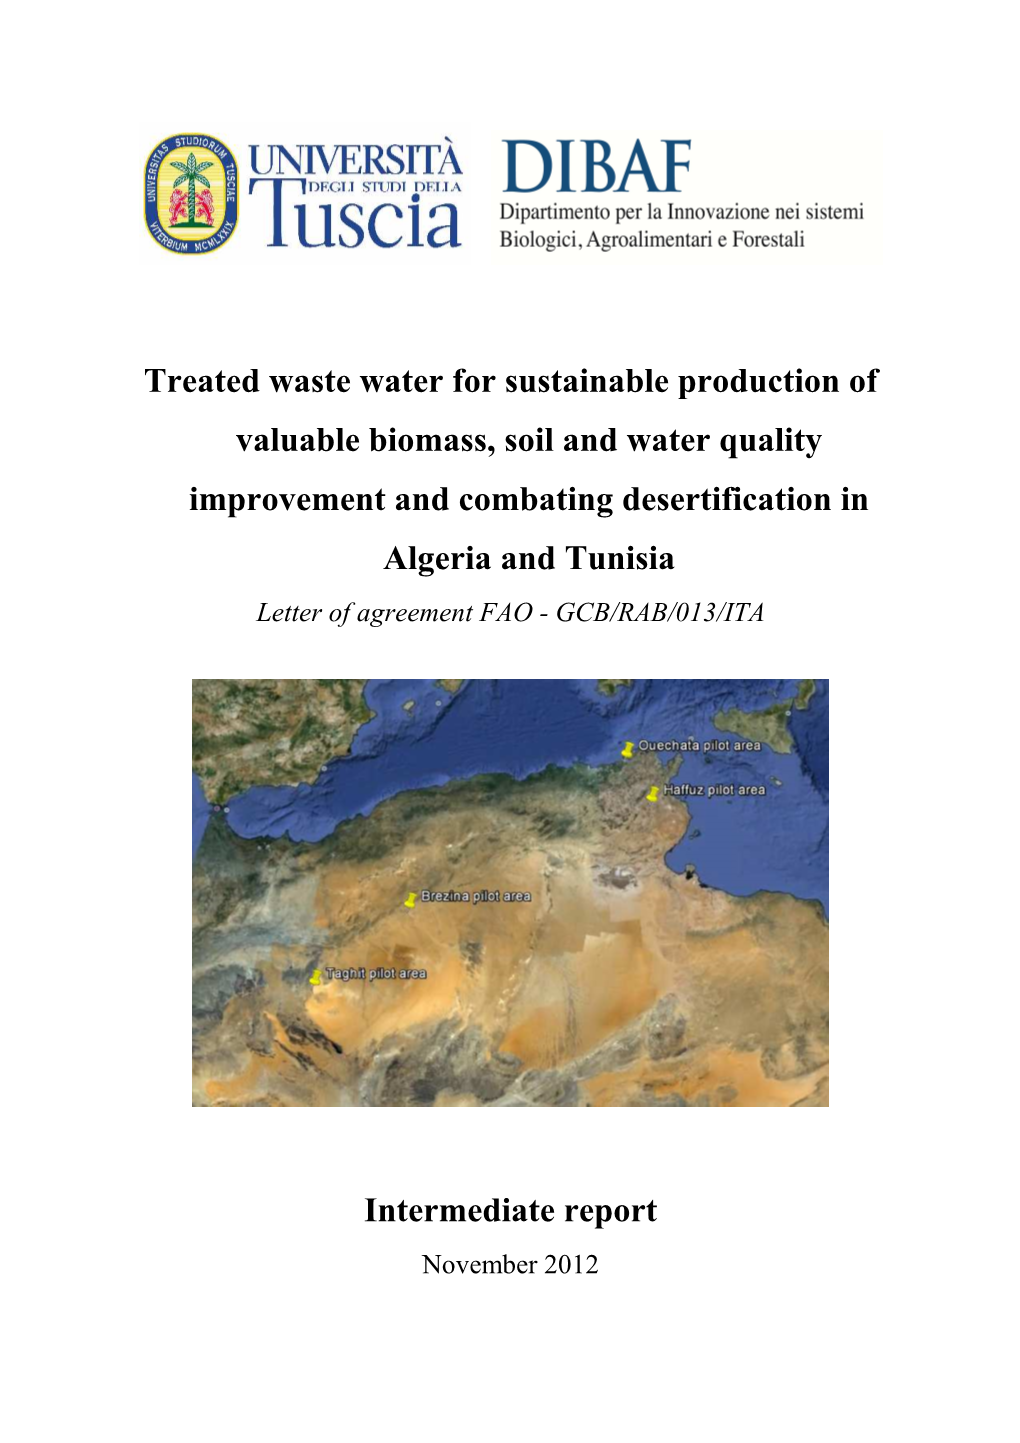 Tunisia Letter of Agreement FAO - GCB/RAB/013/ITA